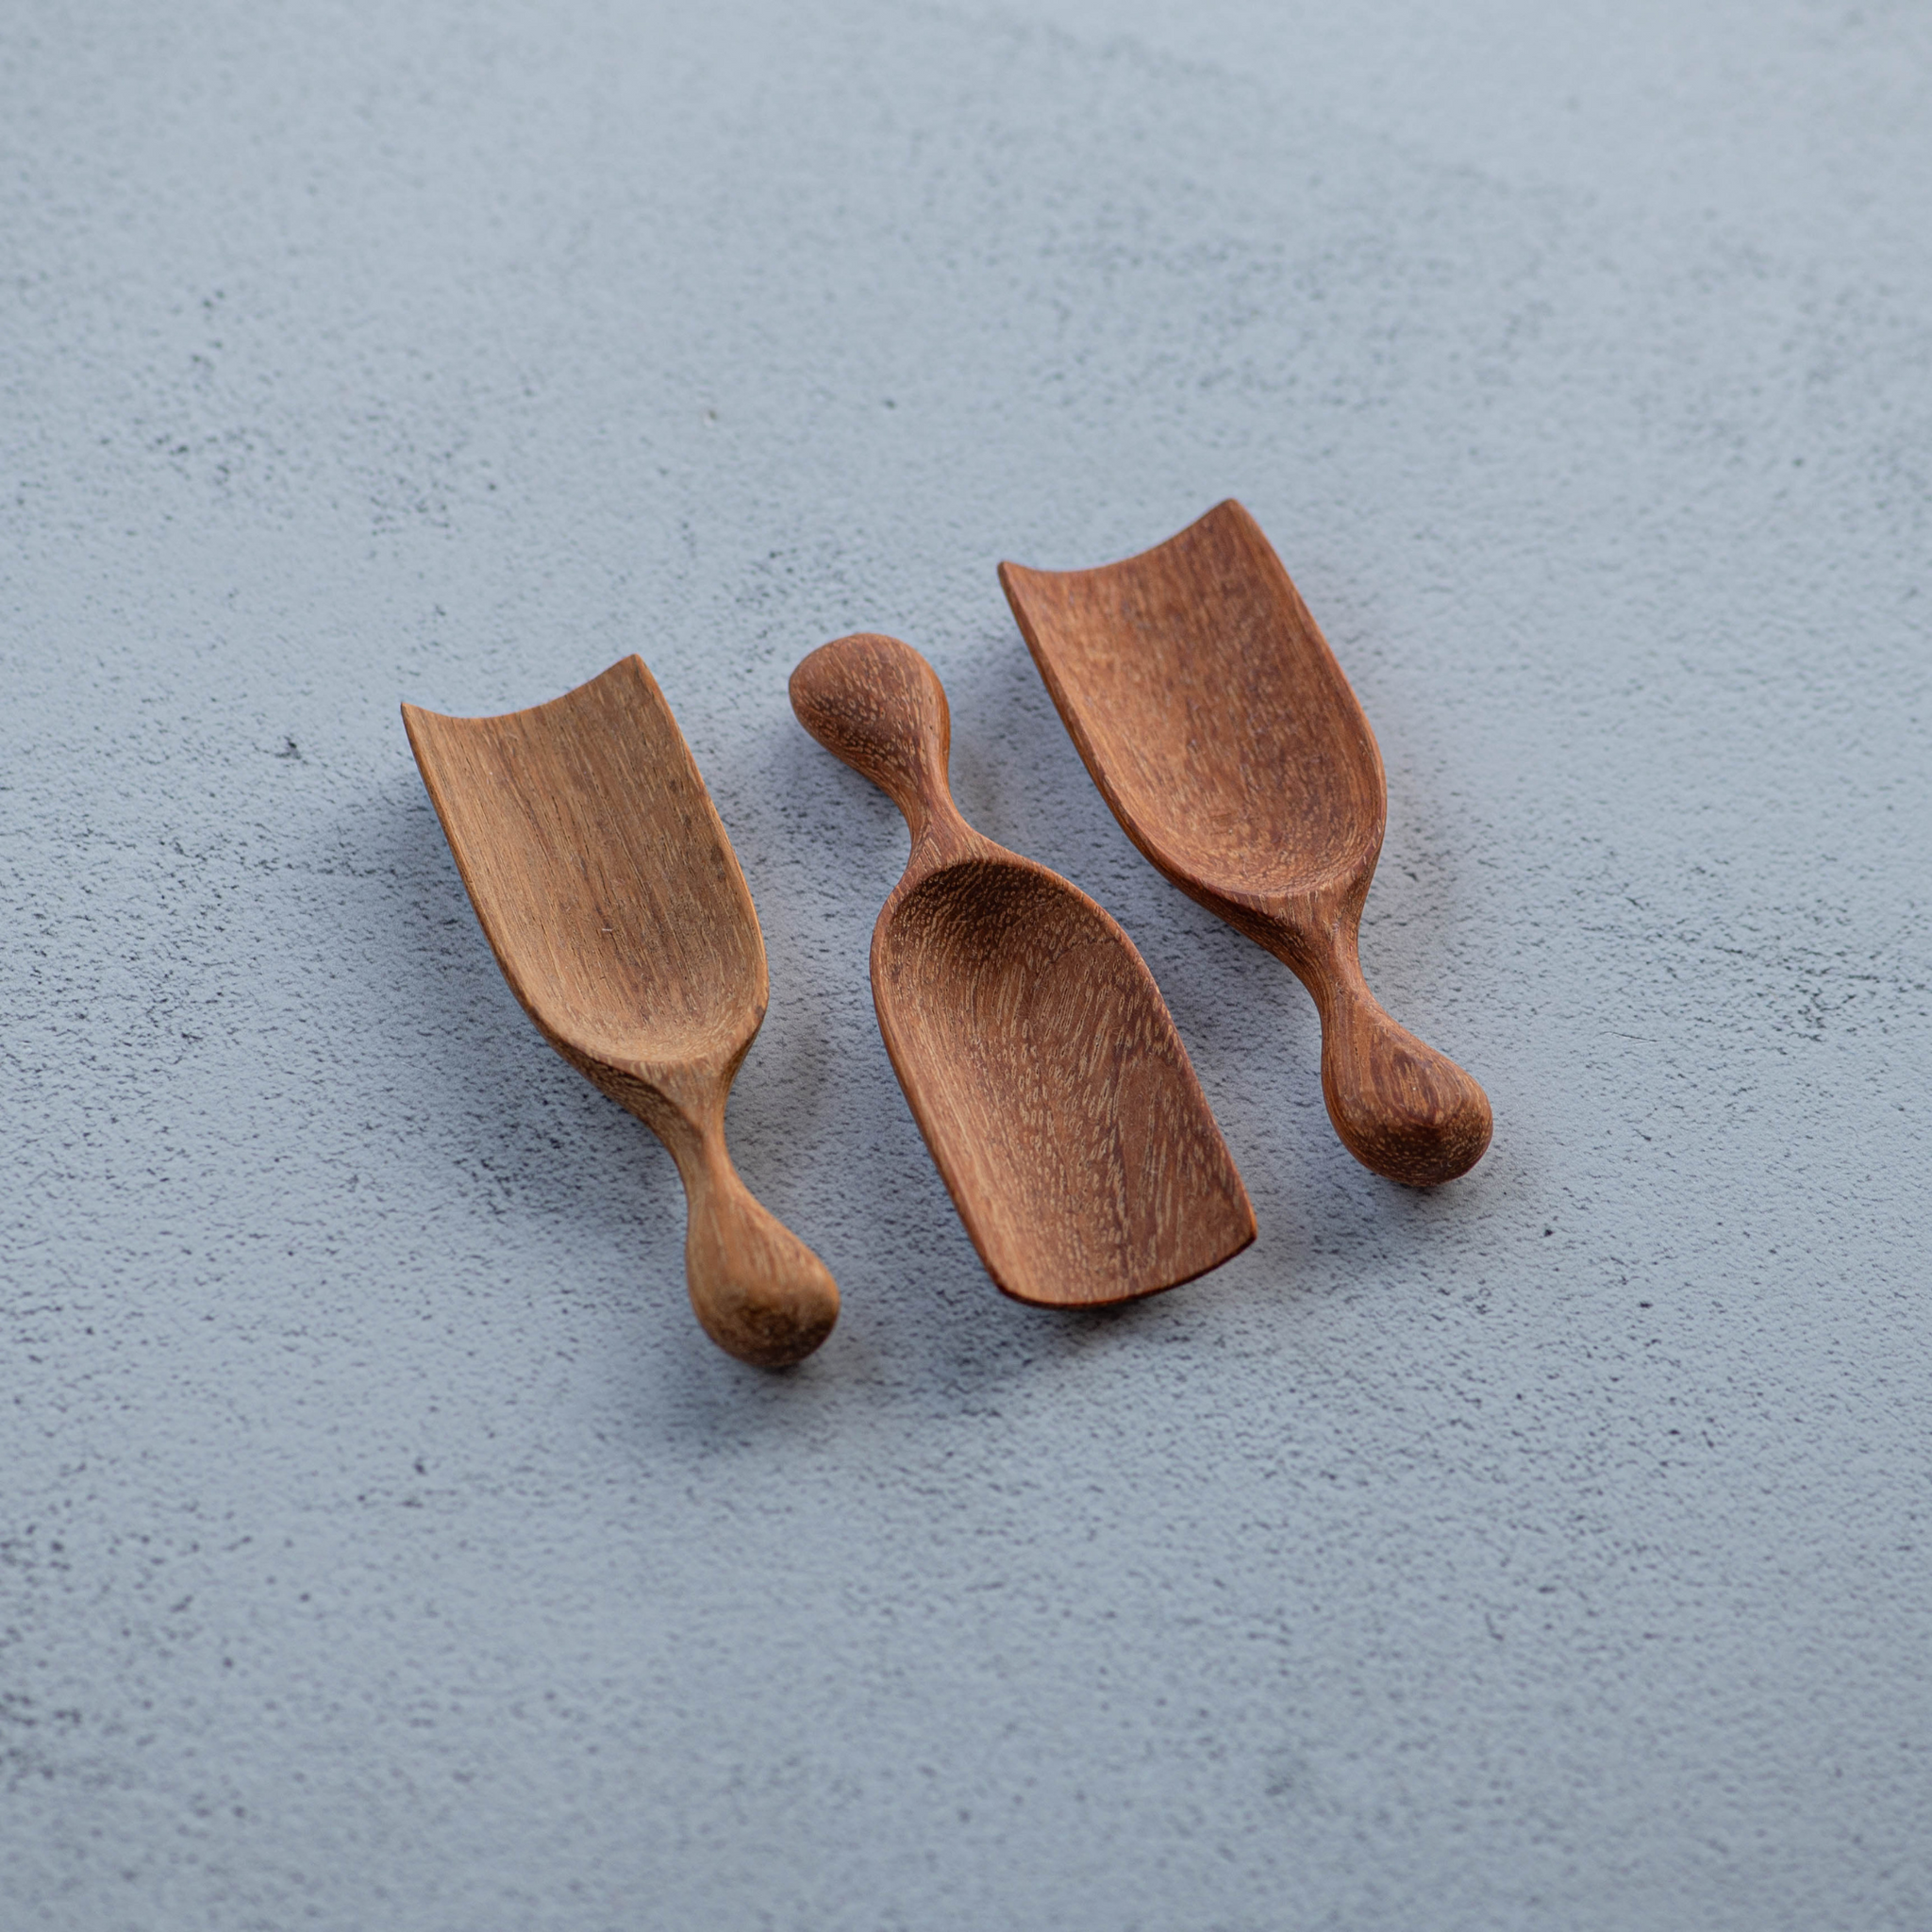 Wooden spoon - Tea caddy spoon